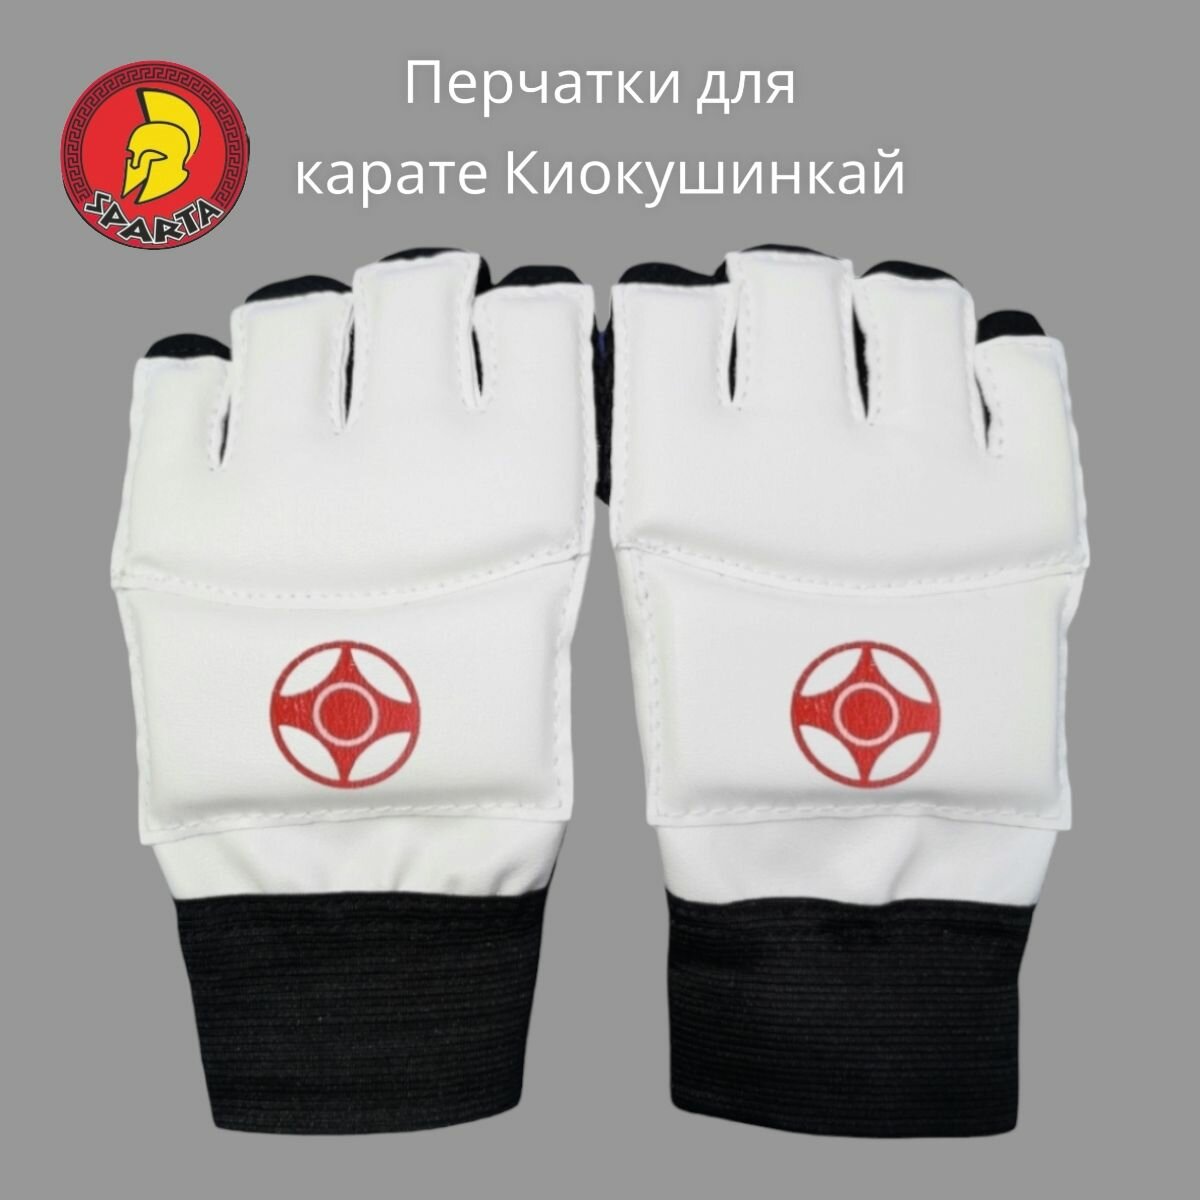 Перчатки для карате Киокушинкай "Чемпион" р. М